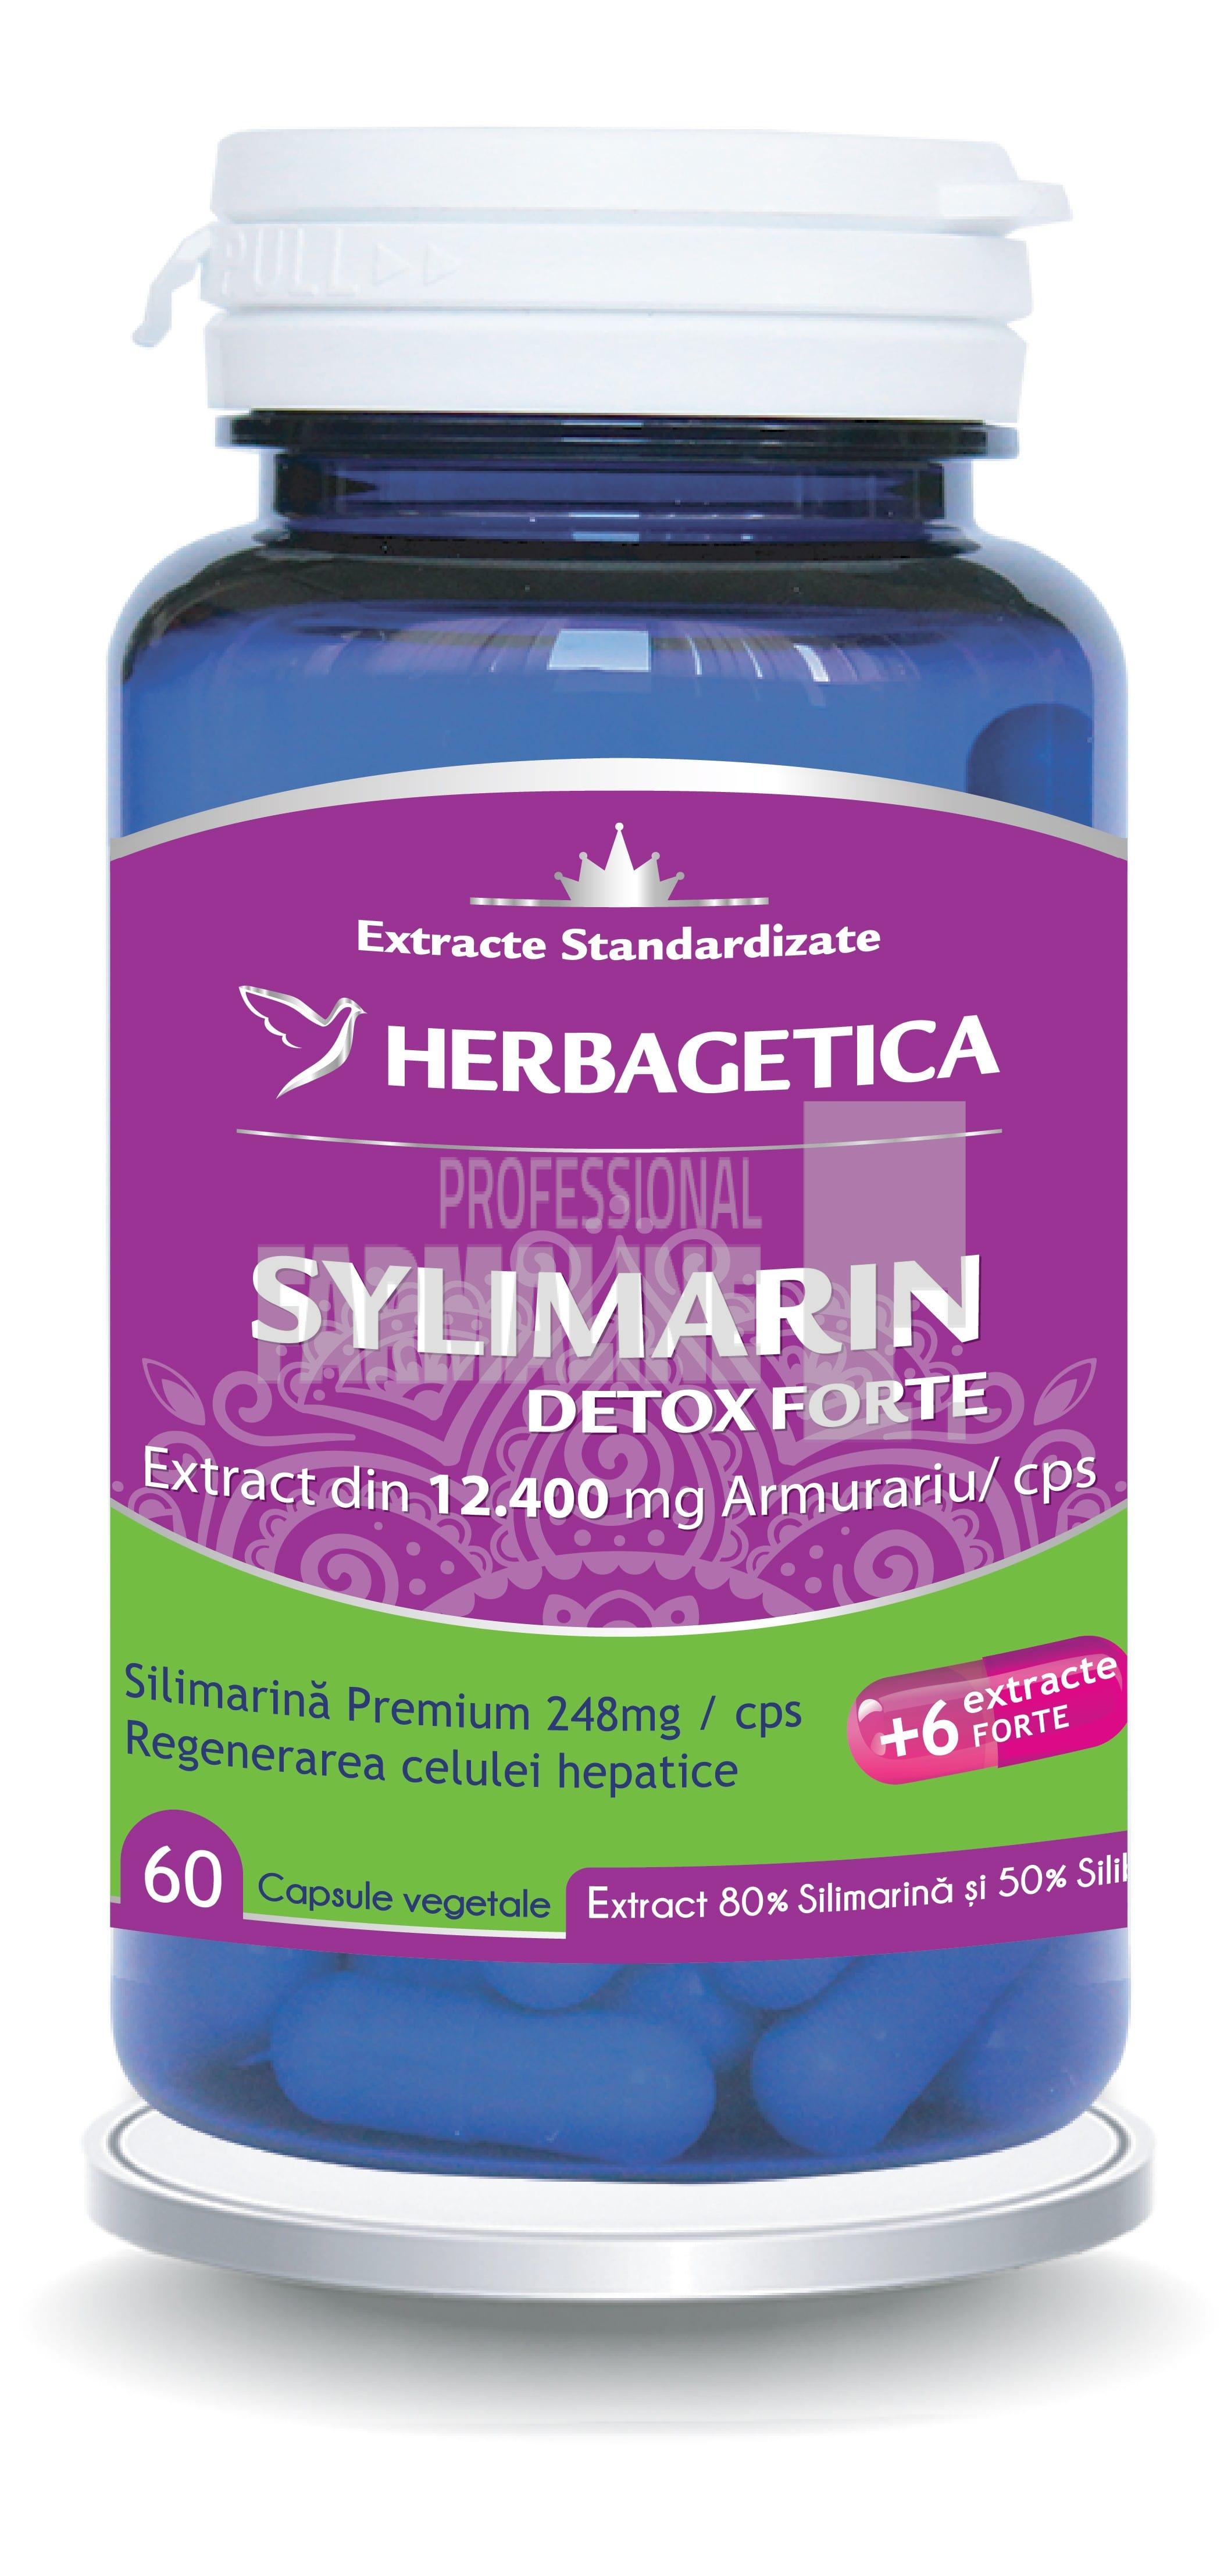 essentiale forte 50 capsule pret farmacia tei Silymarin 80/50 Detox Forte 60 capsule